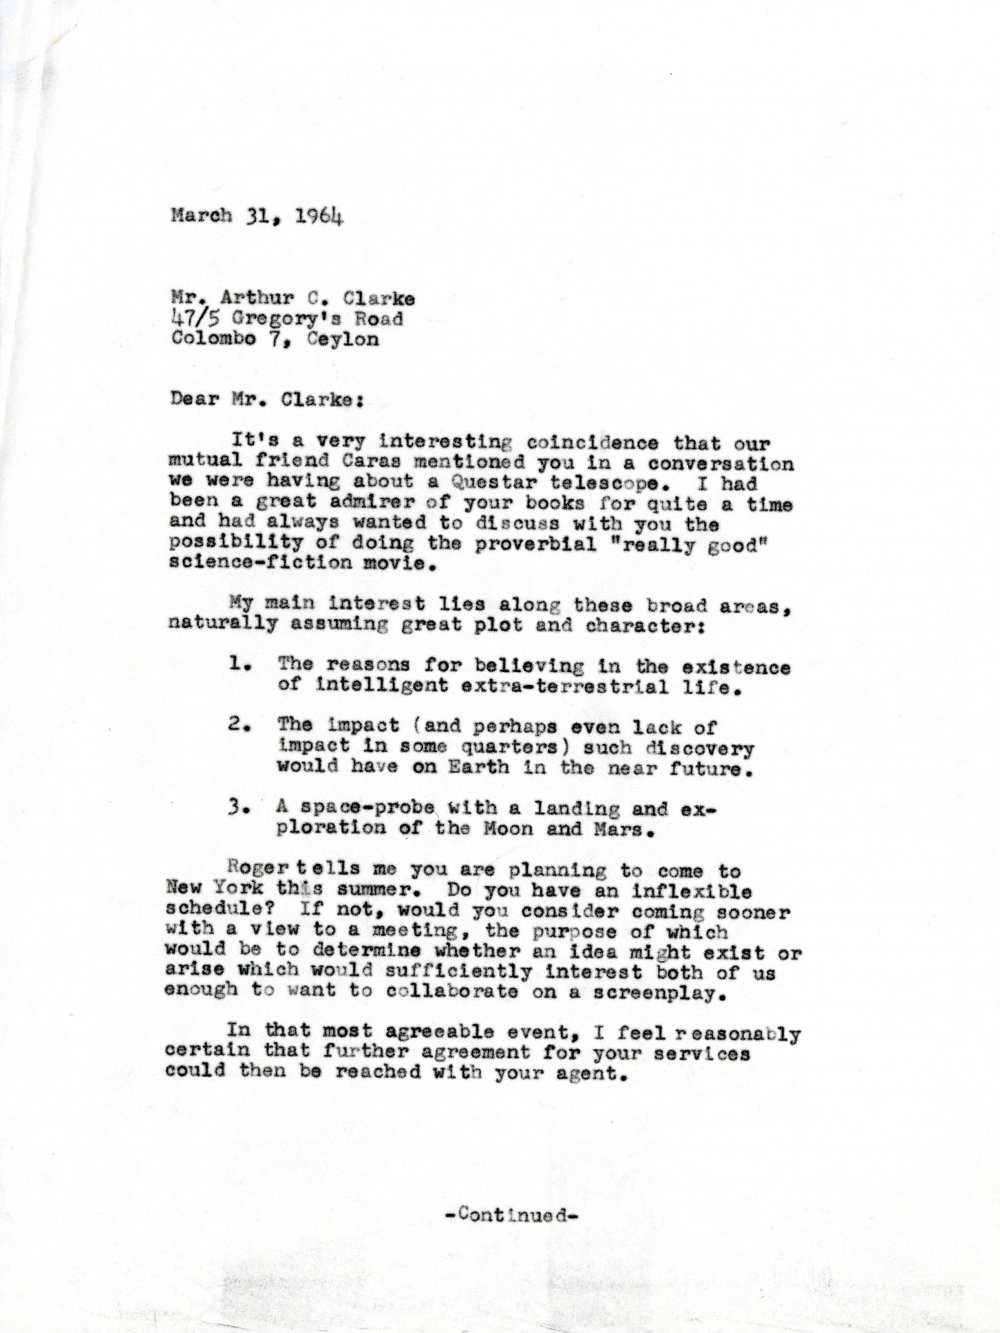 Letter from Stanley Kubrick to Arthur C. Clarke